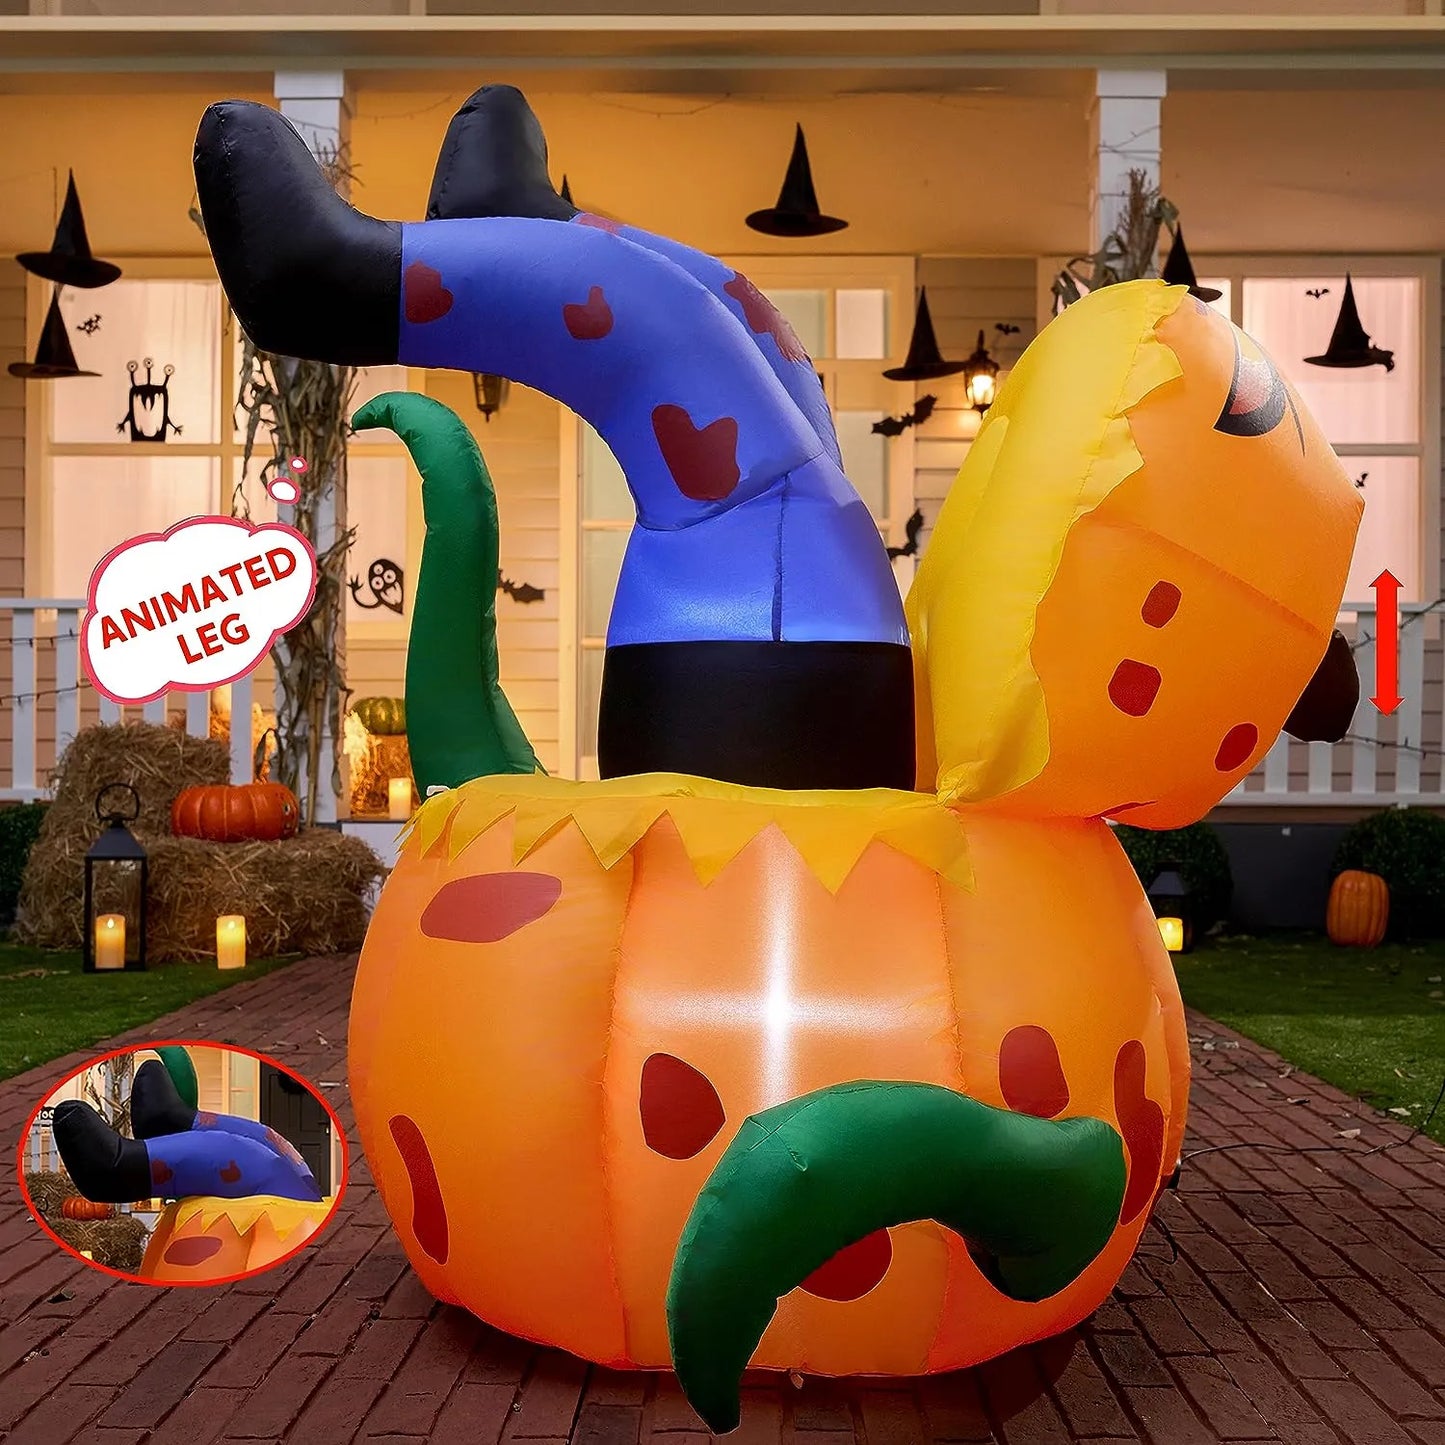 Joiedomi 5ft Pumpkin Eating Human LED Halloween Inflatable